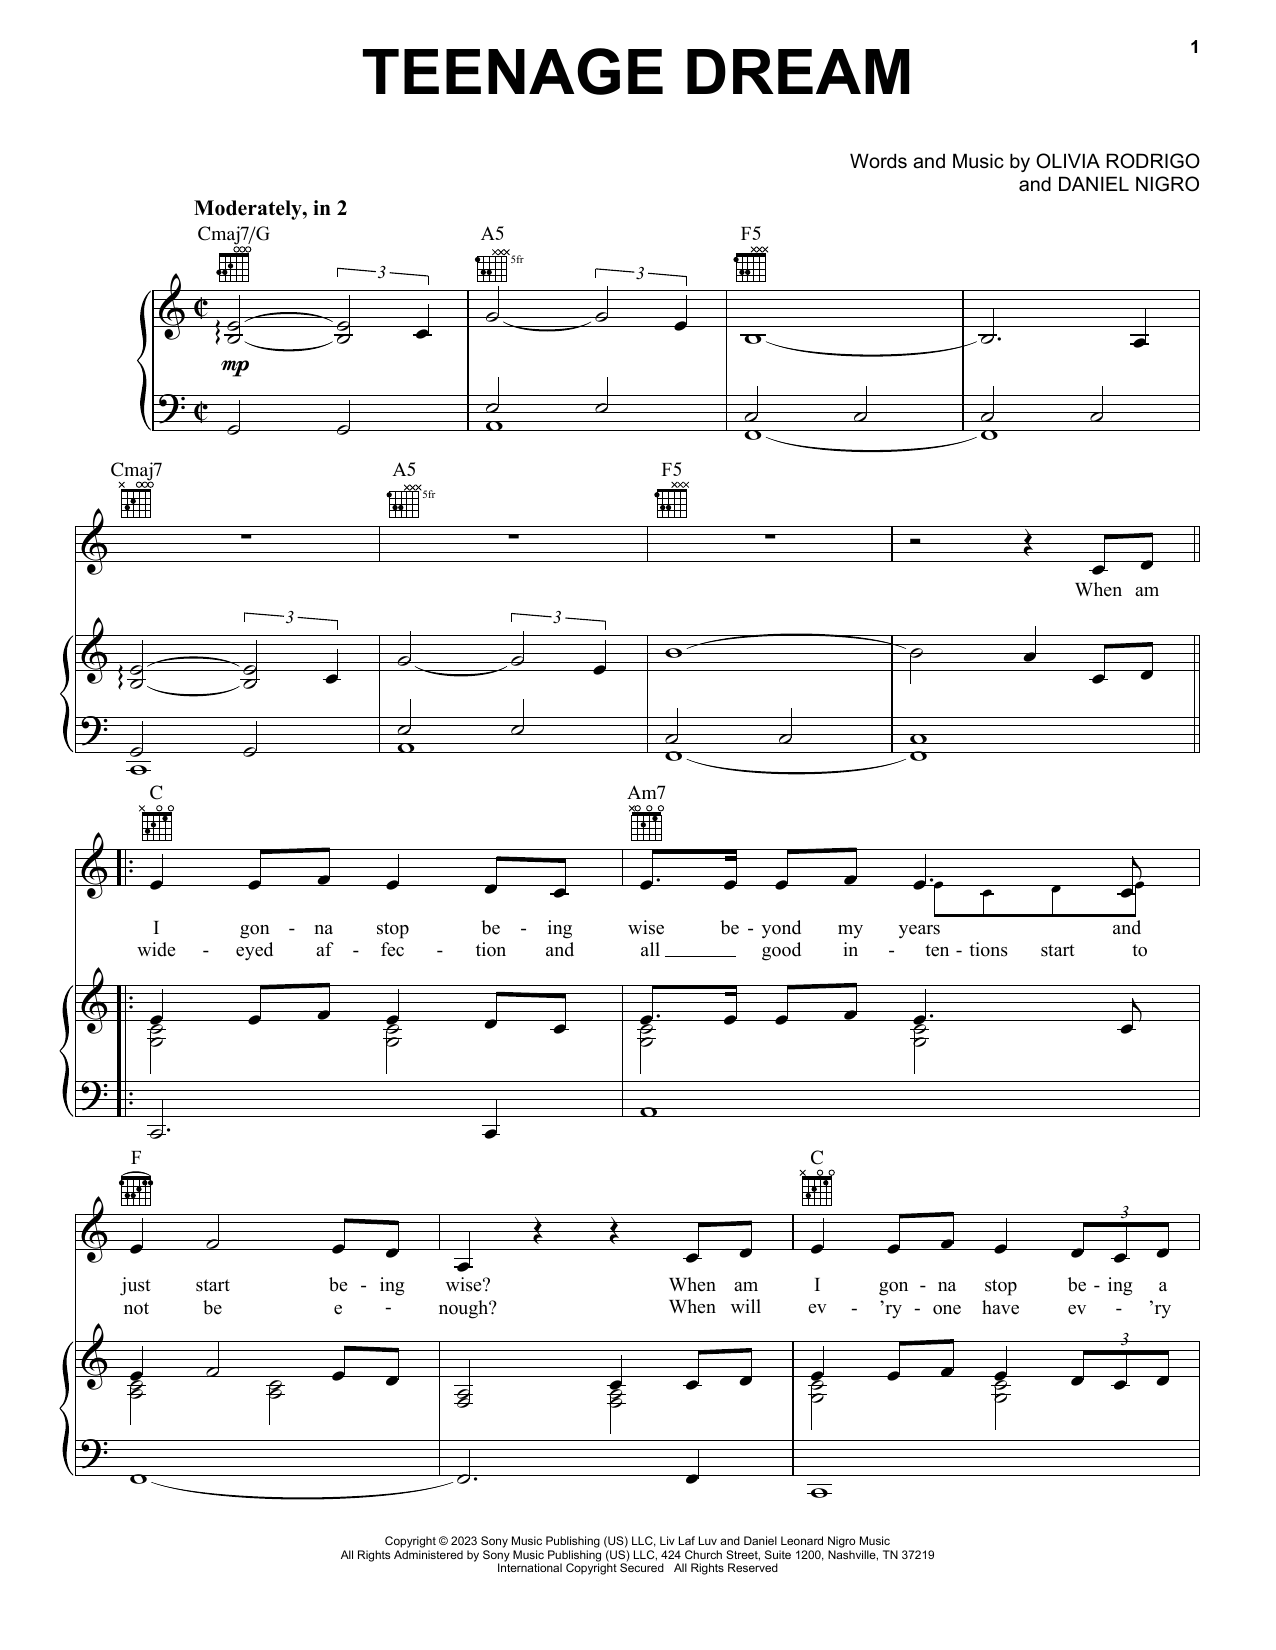 Olivia Rodrigo teenage dream Sheet Music Notes & Chords for Piano, Vocal & Guitar Chords (Right-Hand Melody) - Download or Print PDF